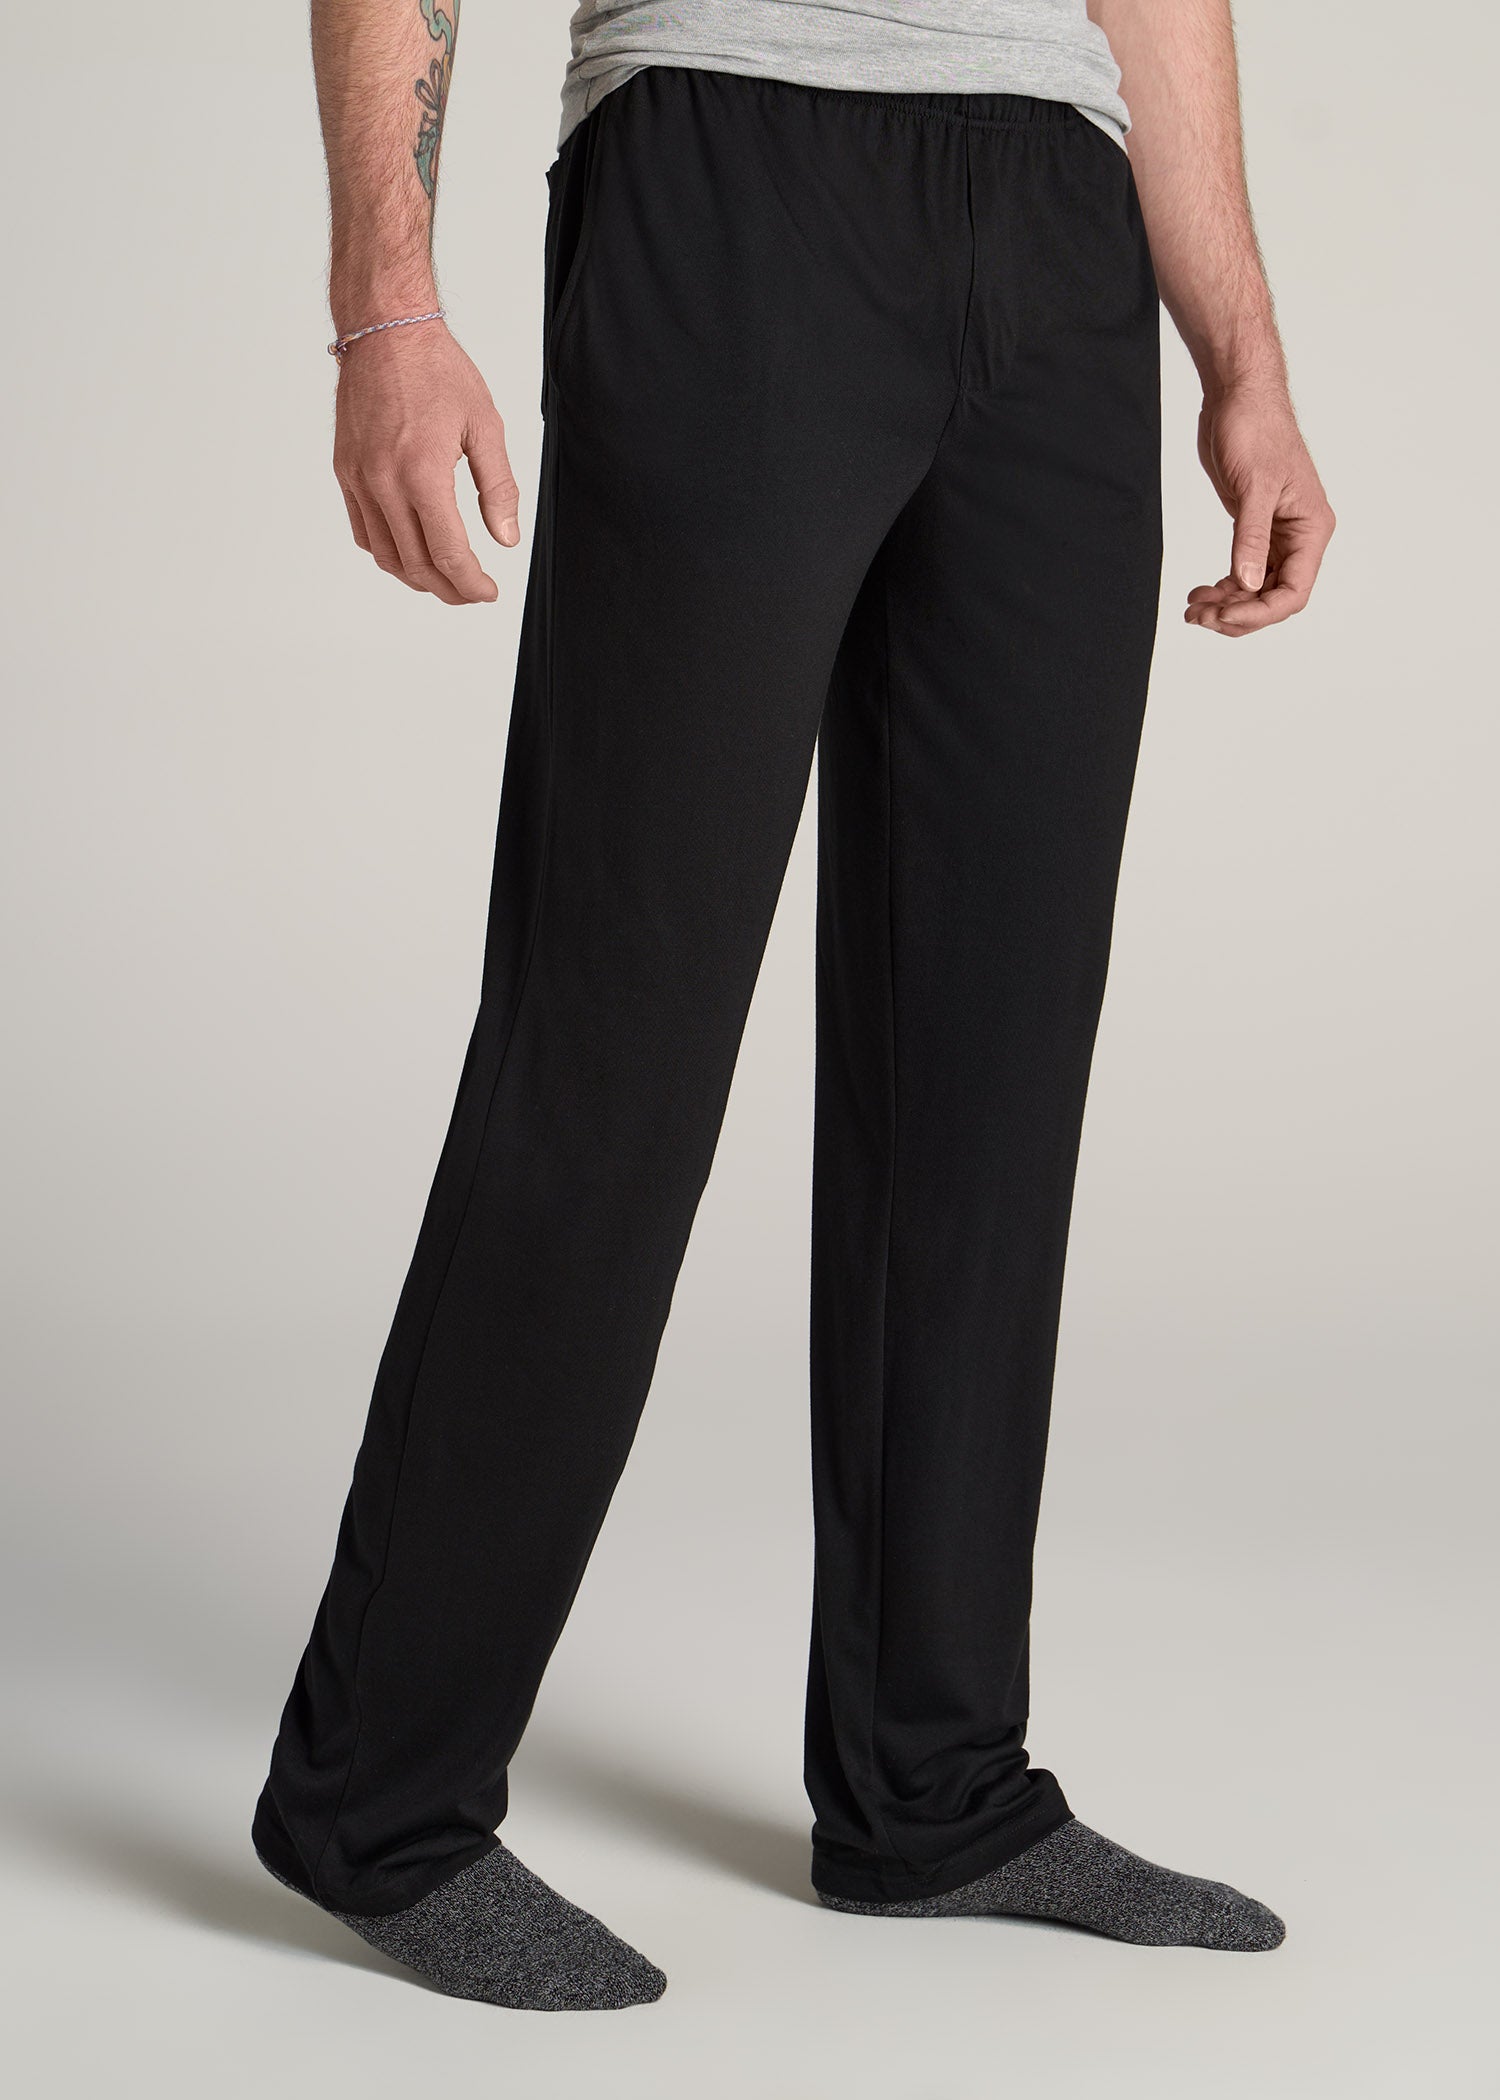 Just Love Women's Plaid Pajama Pants in 100% Cotton Jersey - Comfortable  Sleepwear for Women (Black - Plaid, X-Small) - Walmart.com